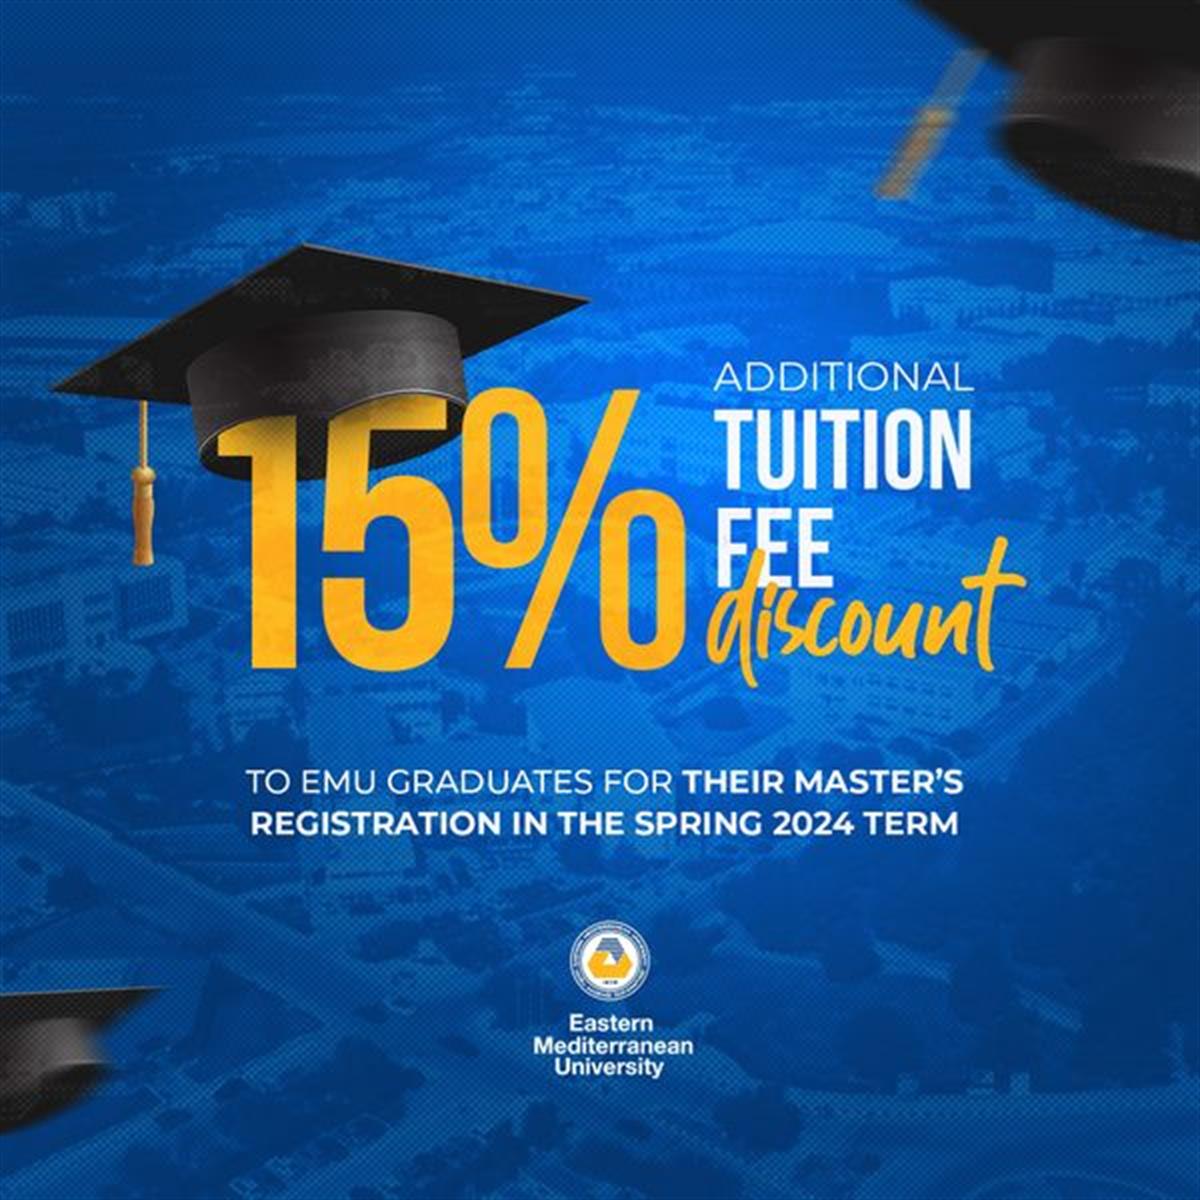 %15 discount for graduates